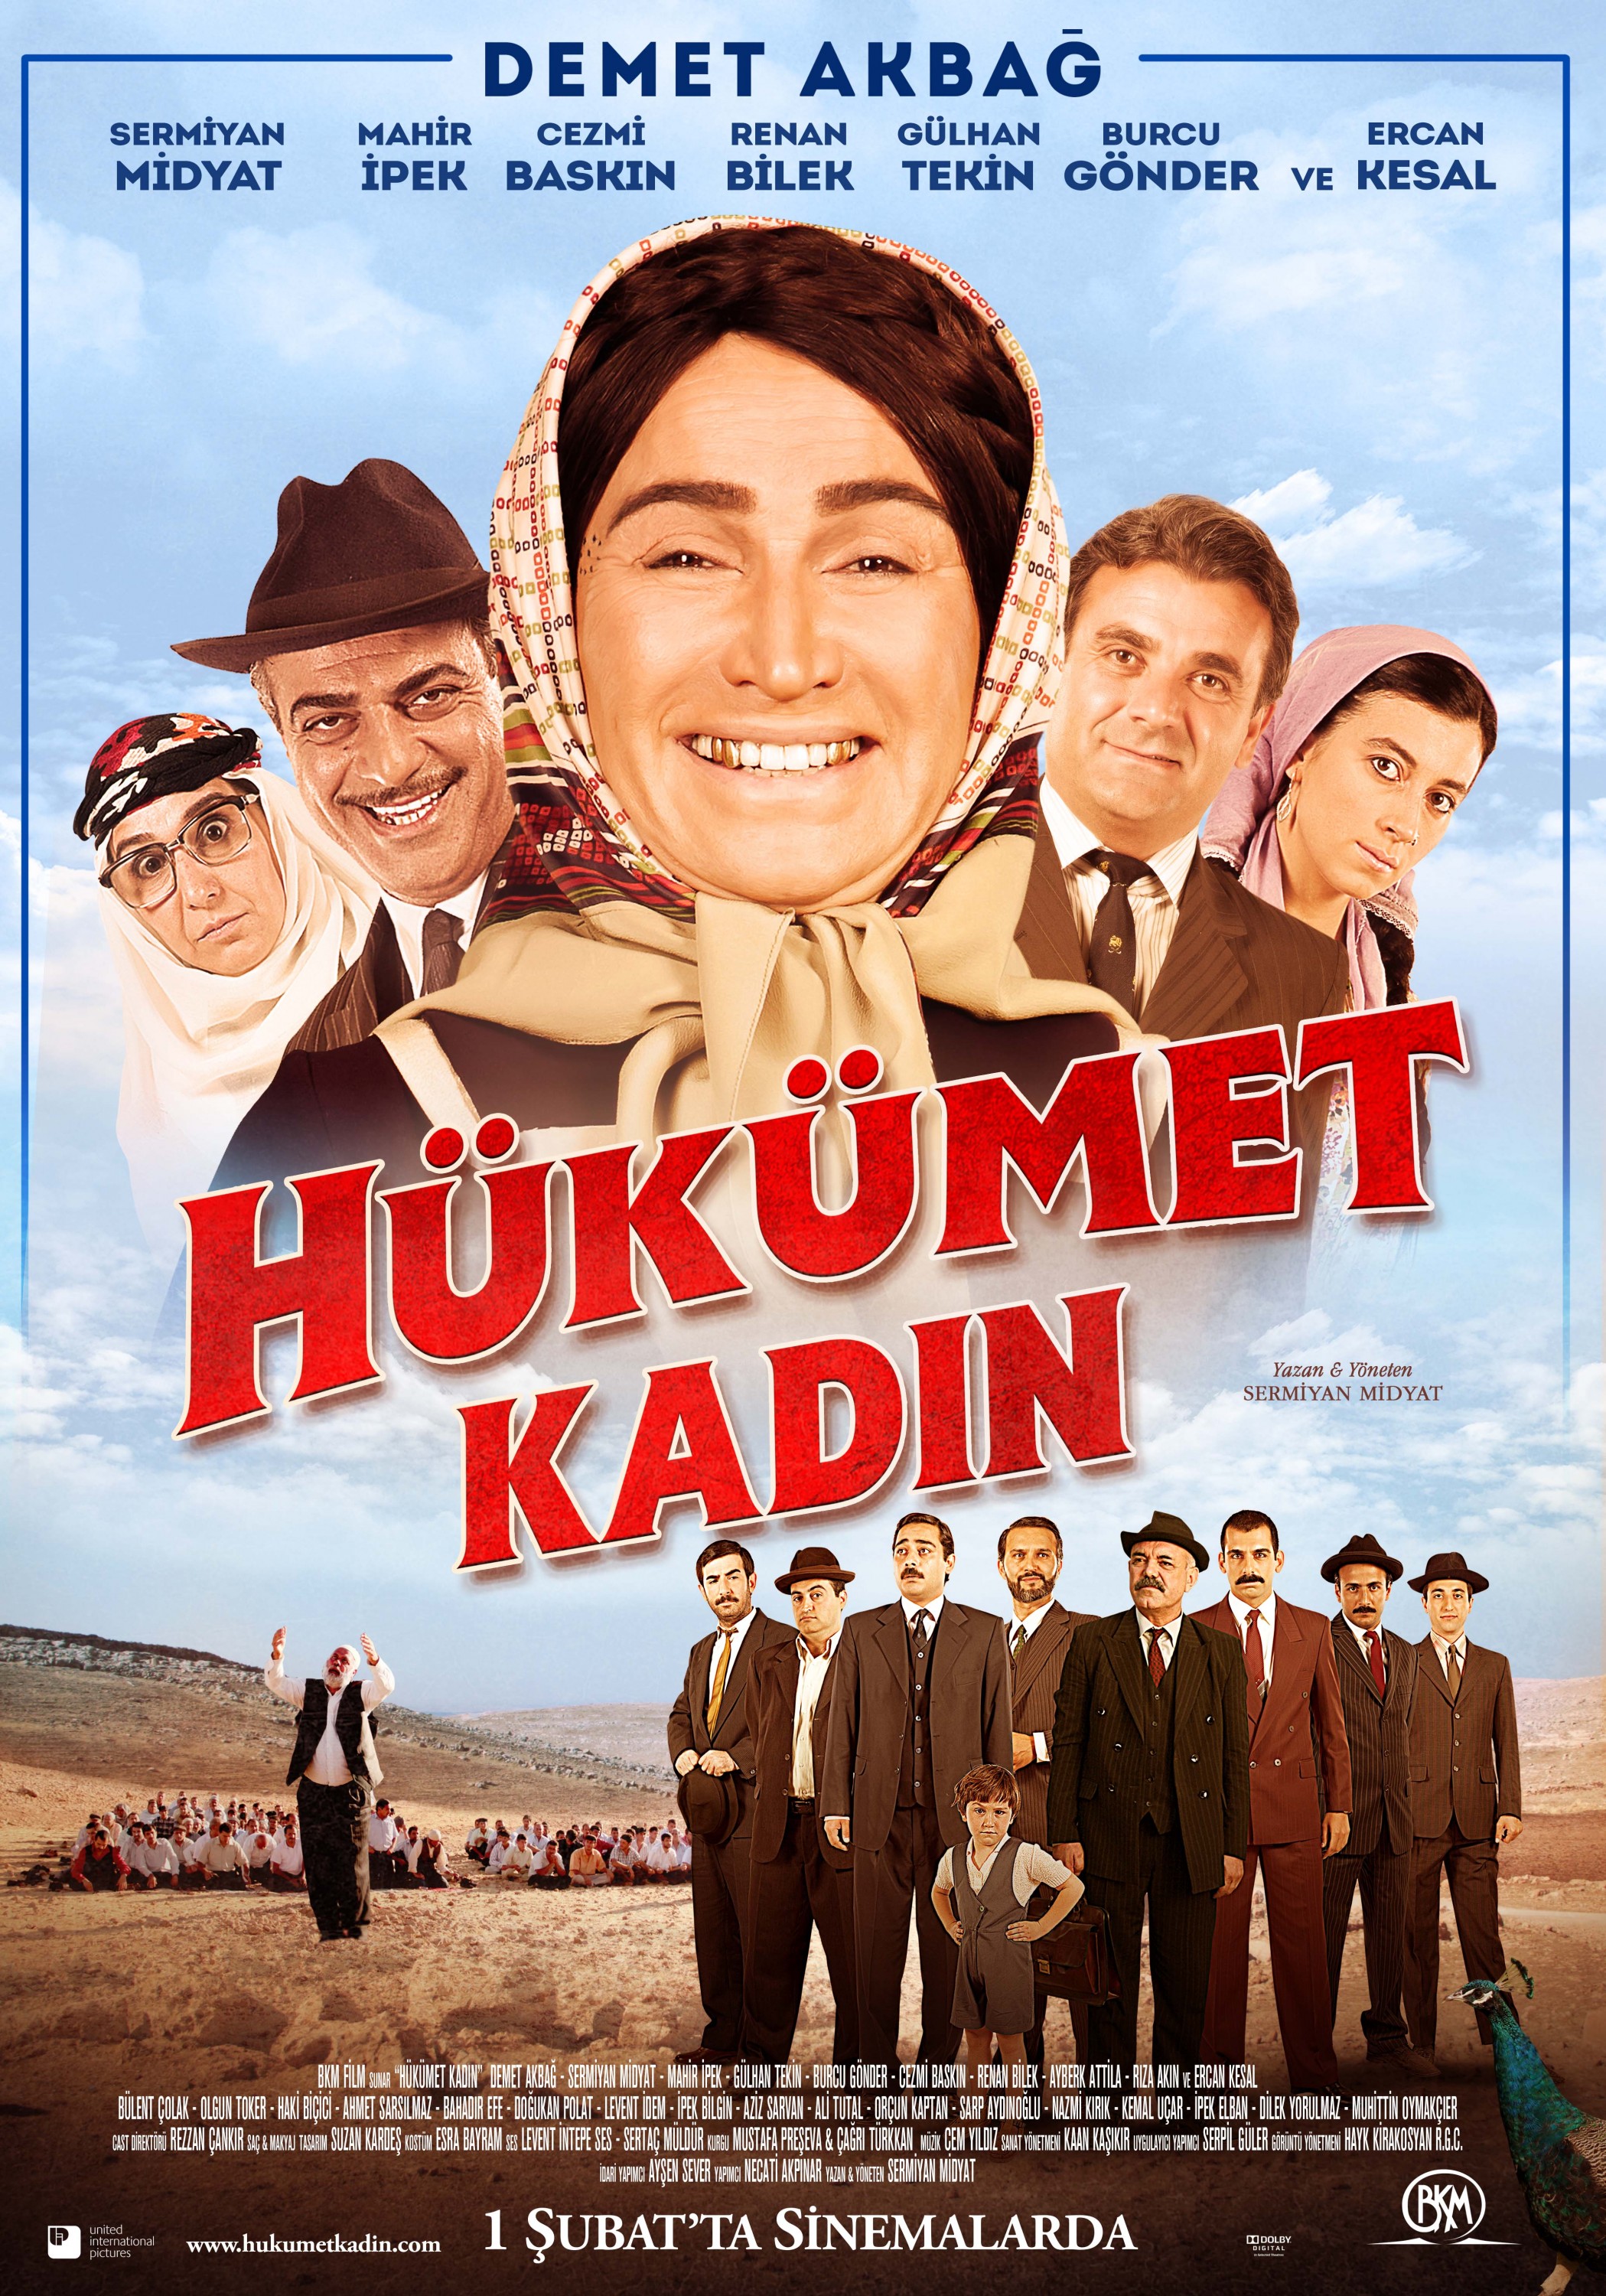 Mega Sized Movie Poster Image for Hükümet kadin (#2 of 6)